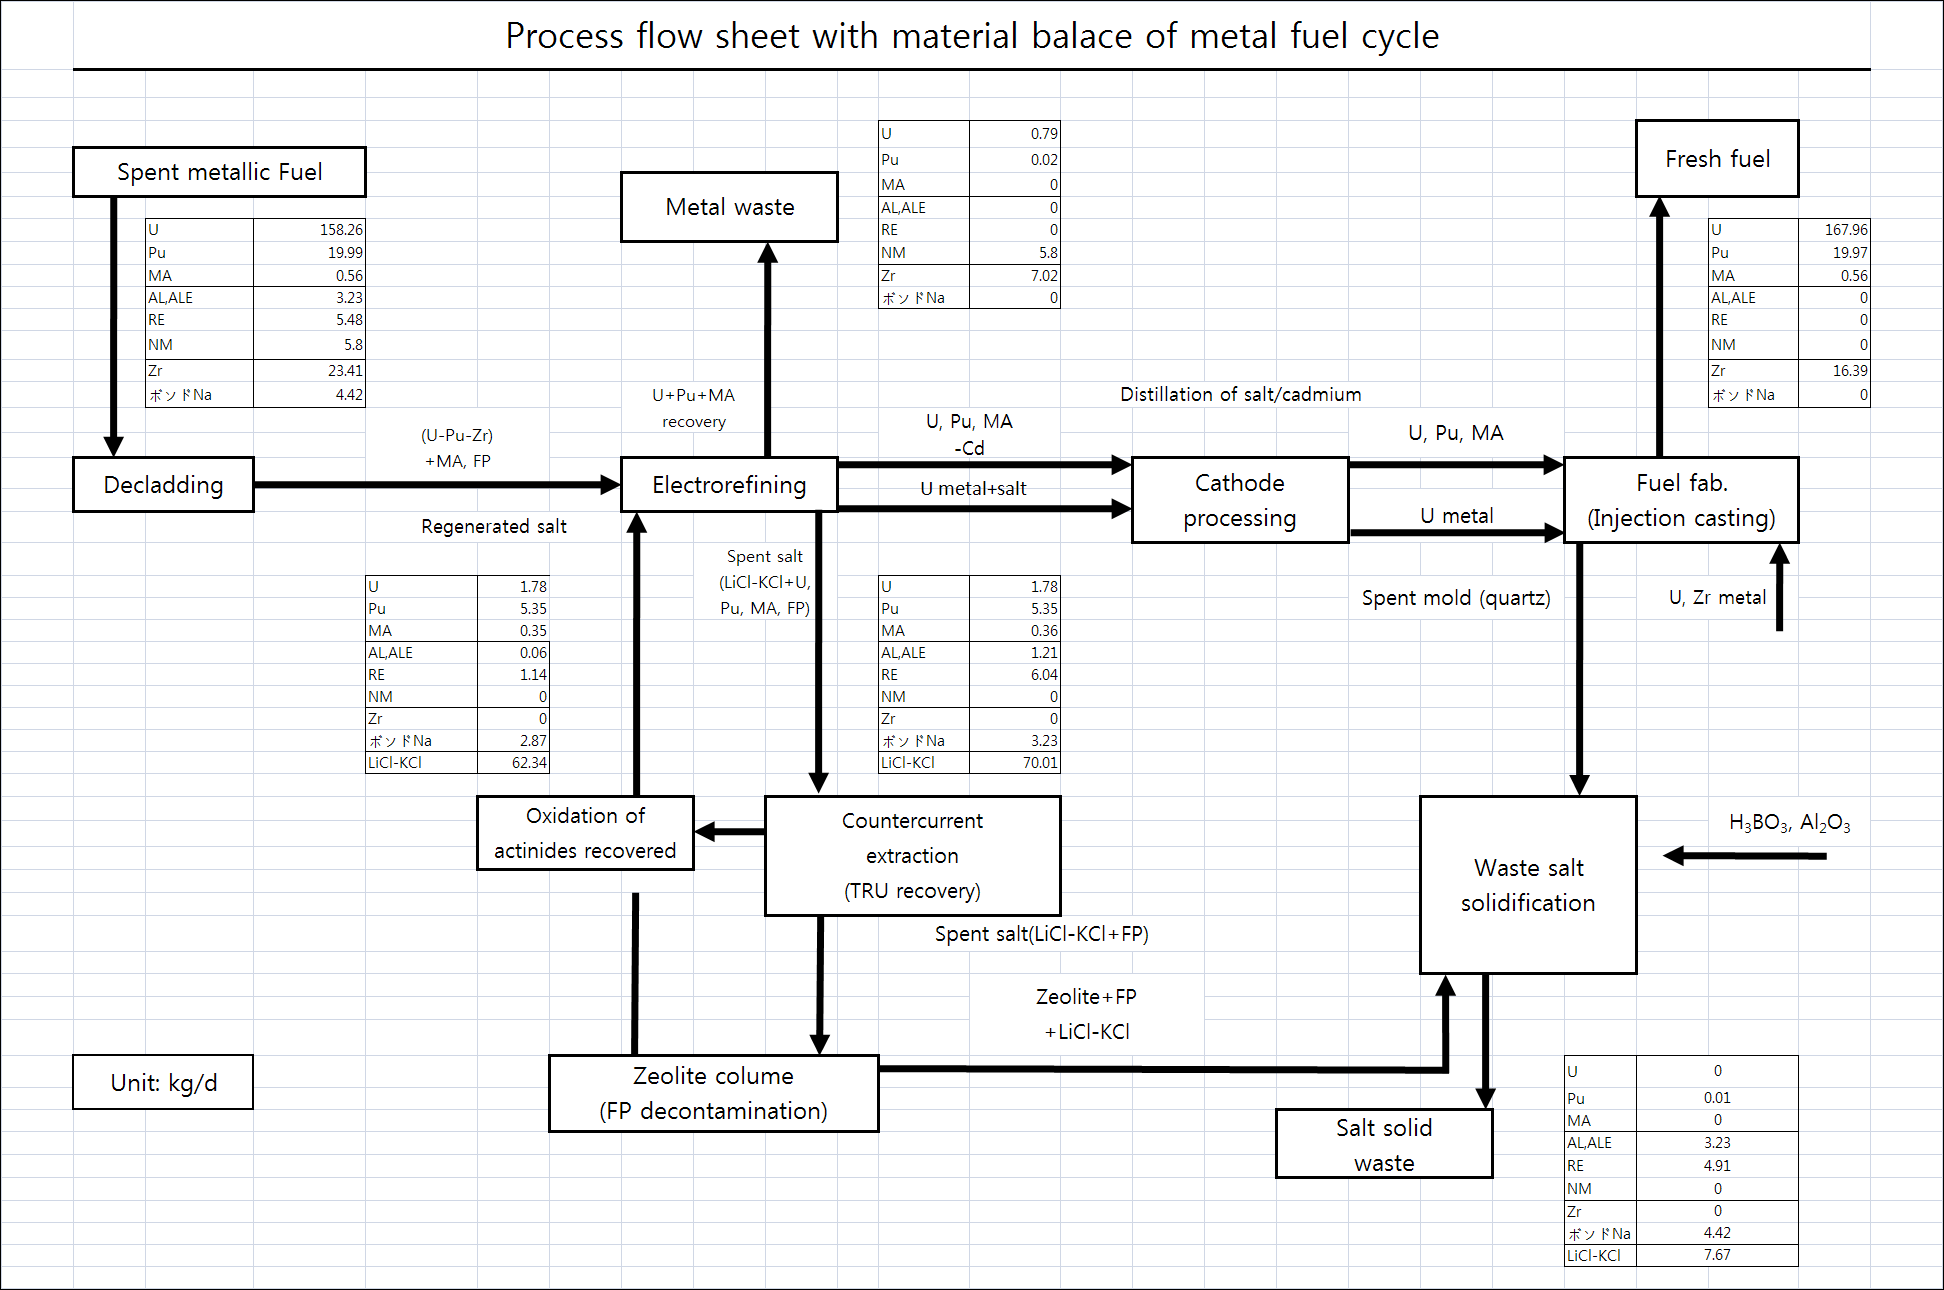 Fig. 2.2.1.2. Flowsheet of metal fuel by CRIEPI